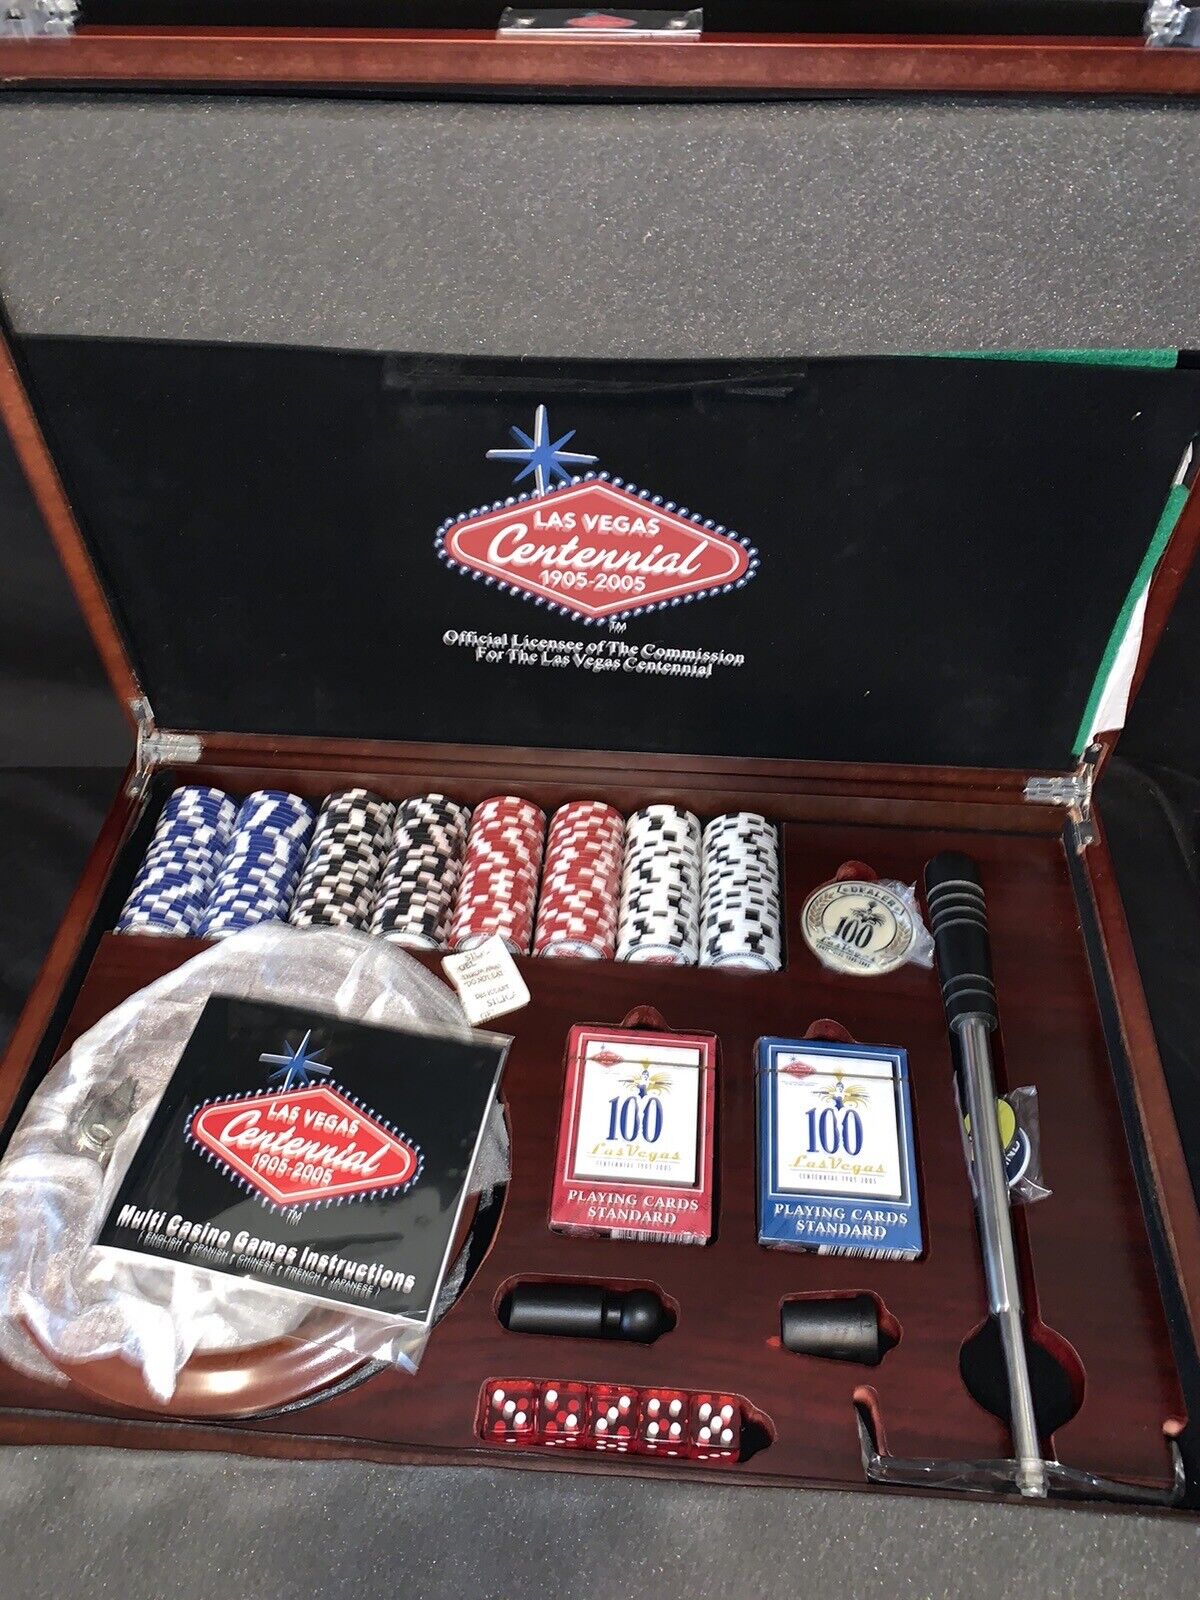 Las Vegas Centennial Official Multi Casino Game Kit Wooden Case 1905-2005 Poker